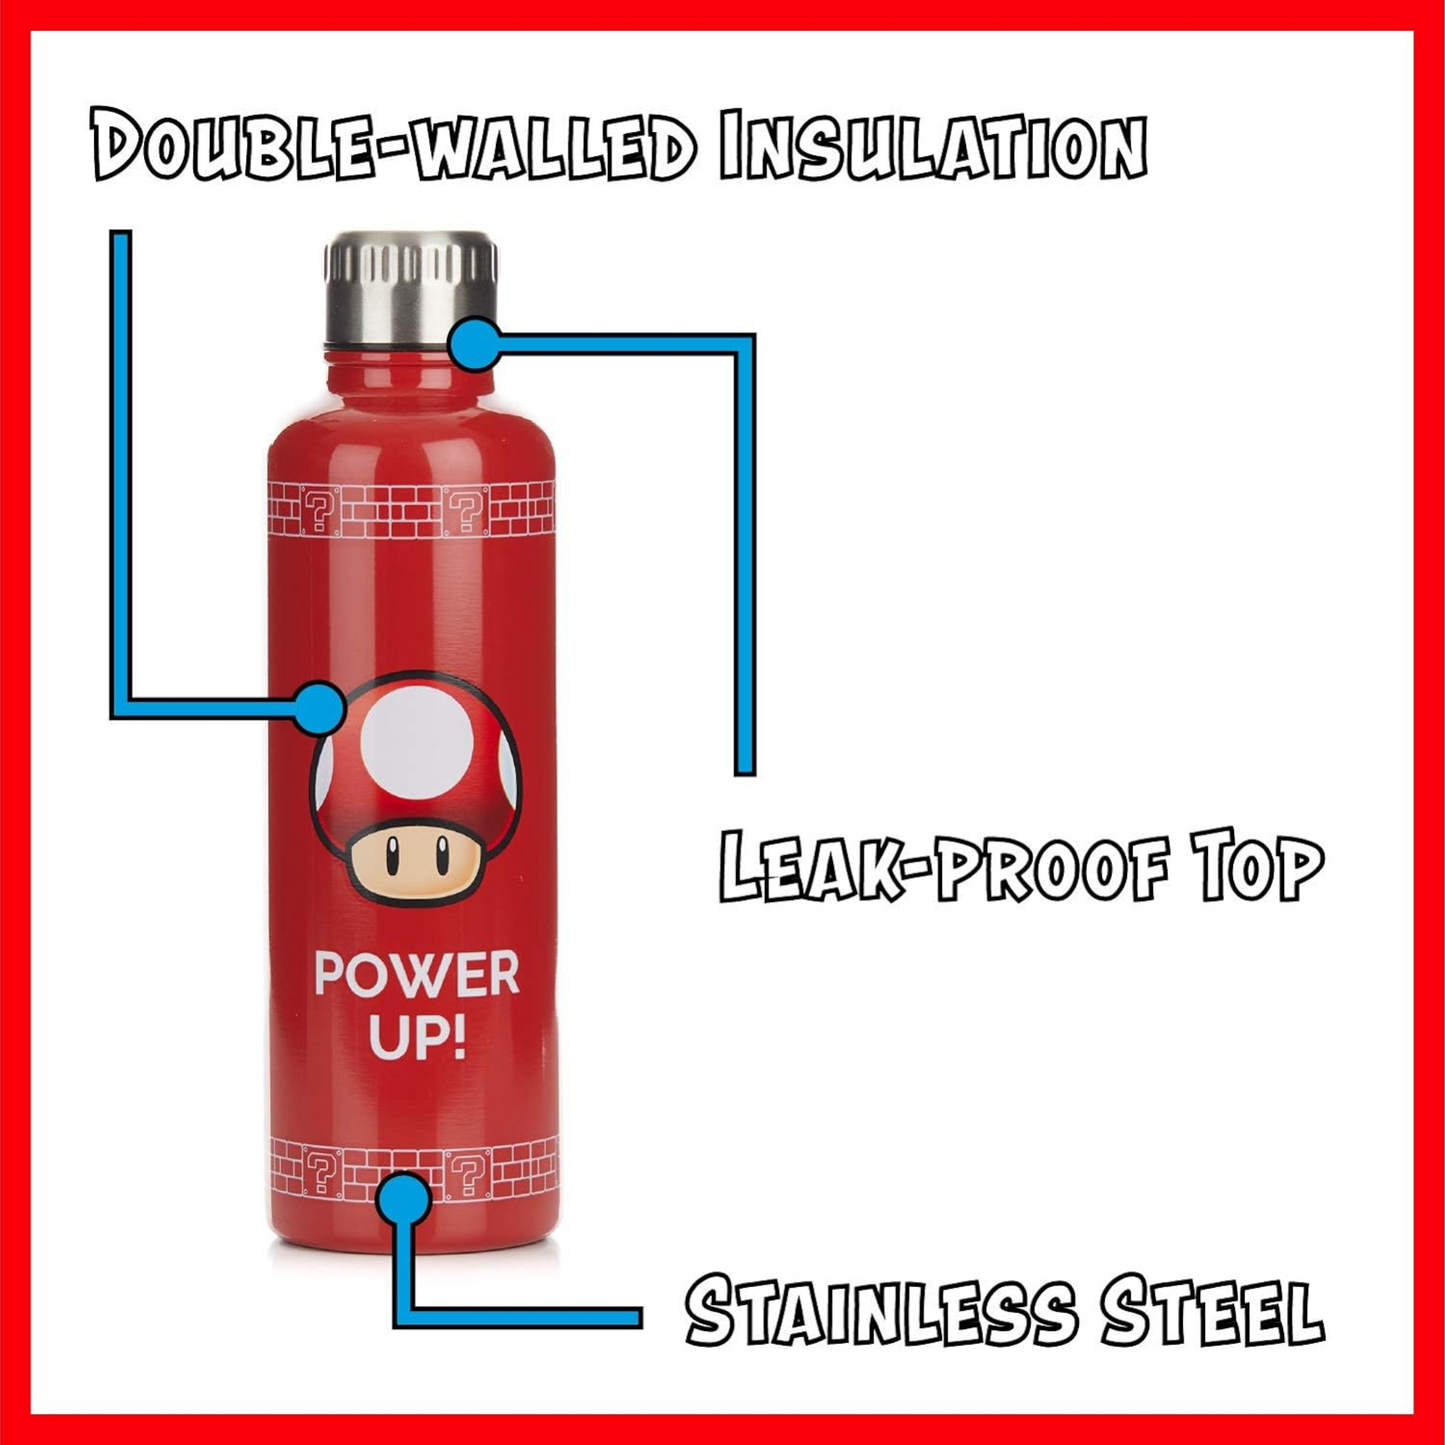 Super mario Power up Water bottle 500ml